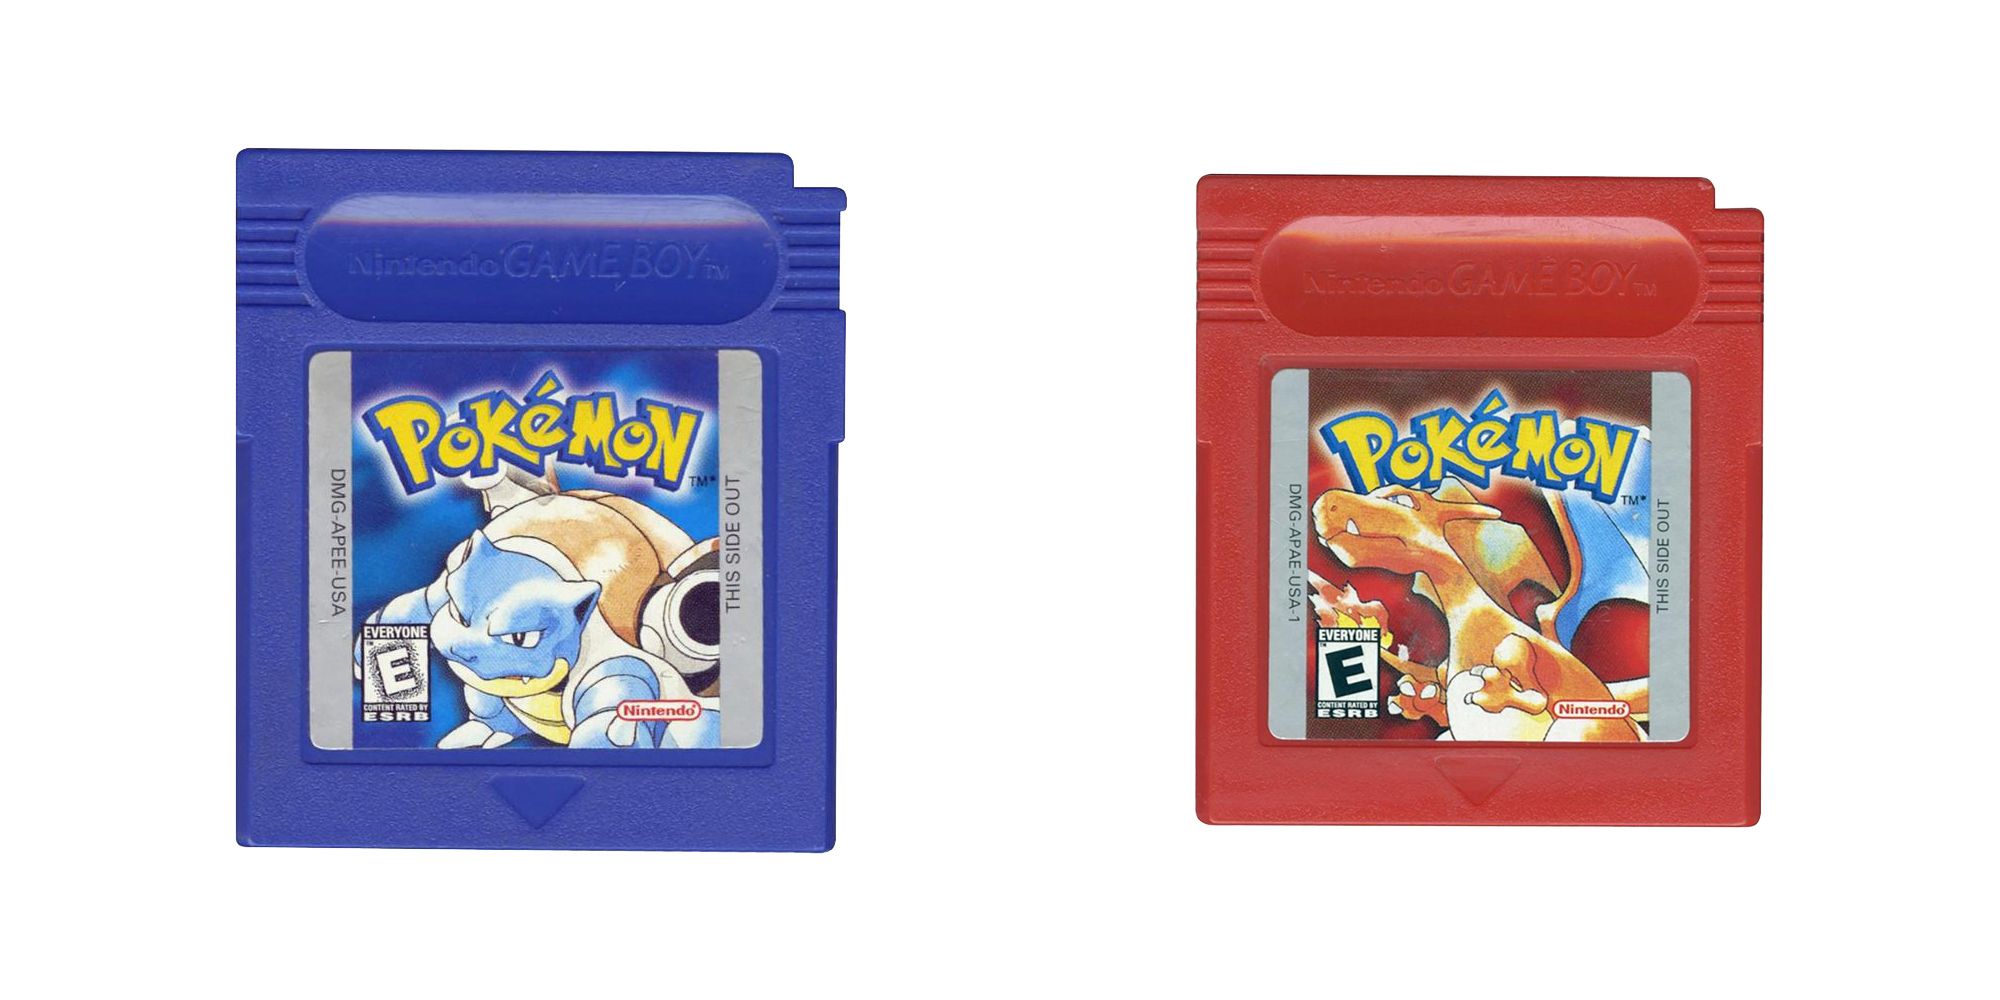 Pokemon Red and Pokemon Blue GameBoy Game Cartridge